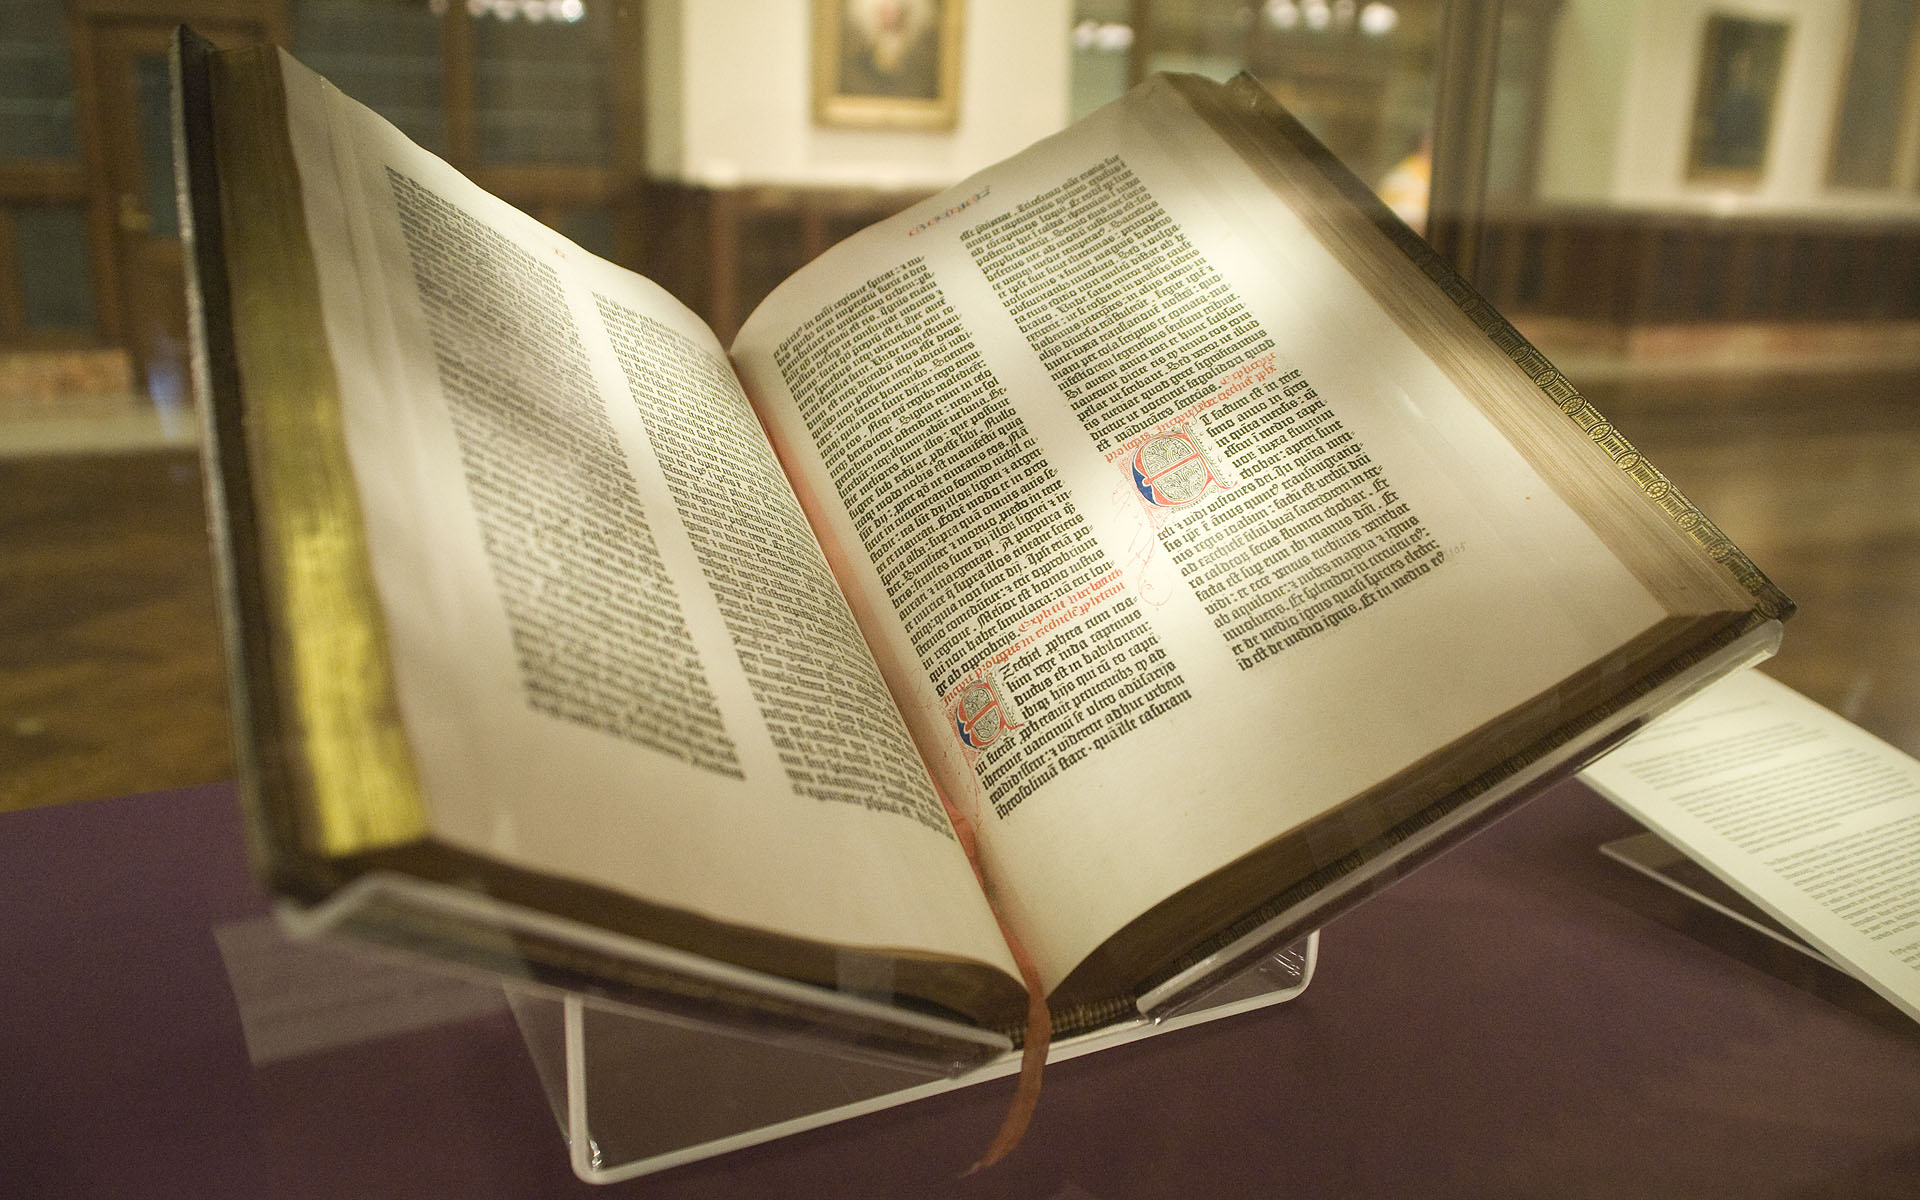 Gutenberg-Bibel